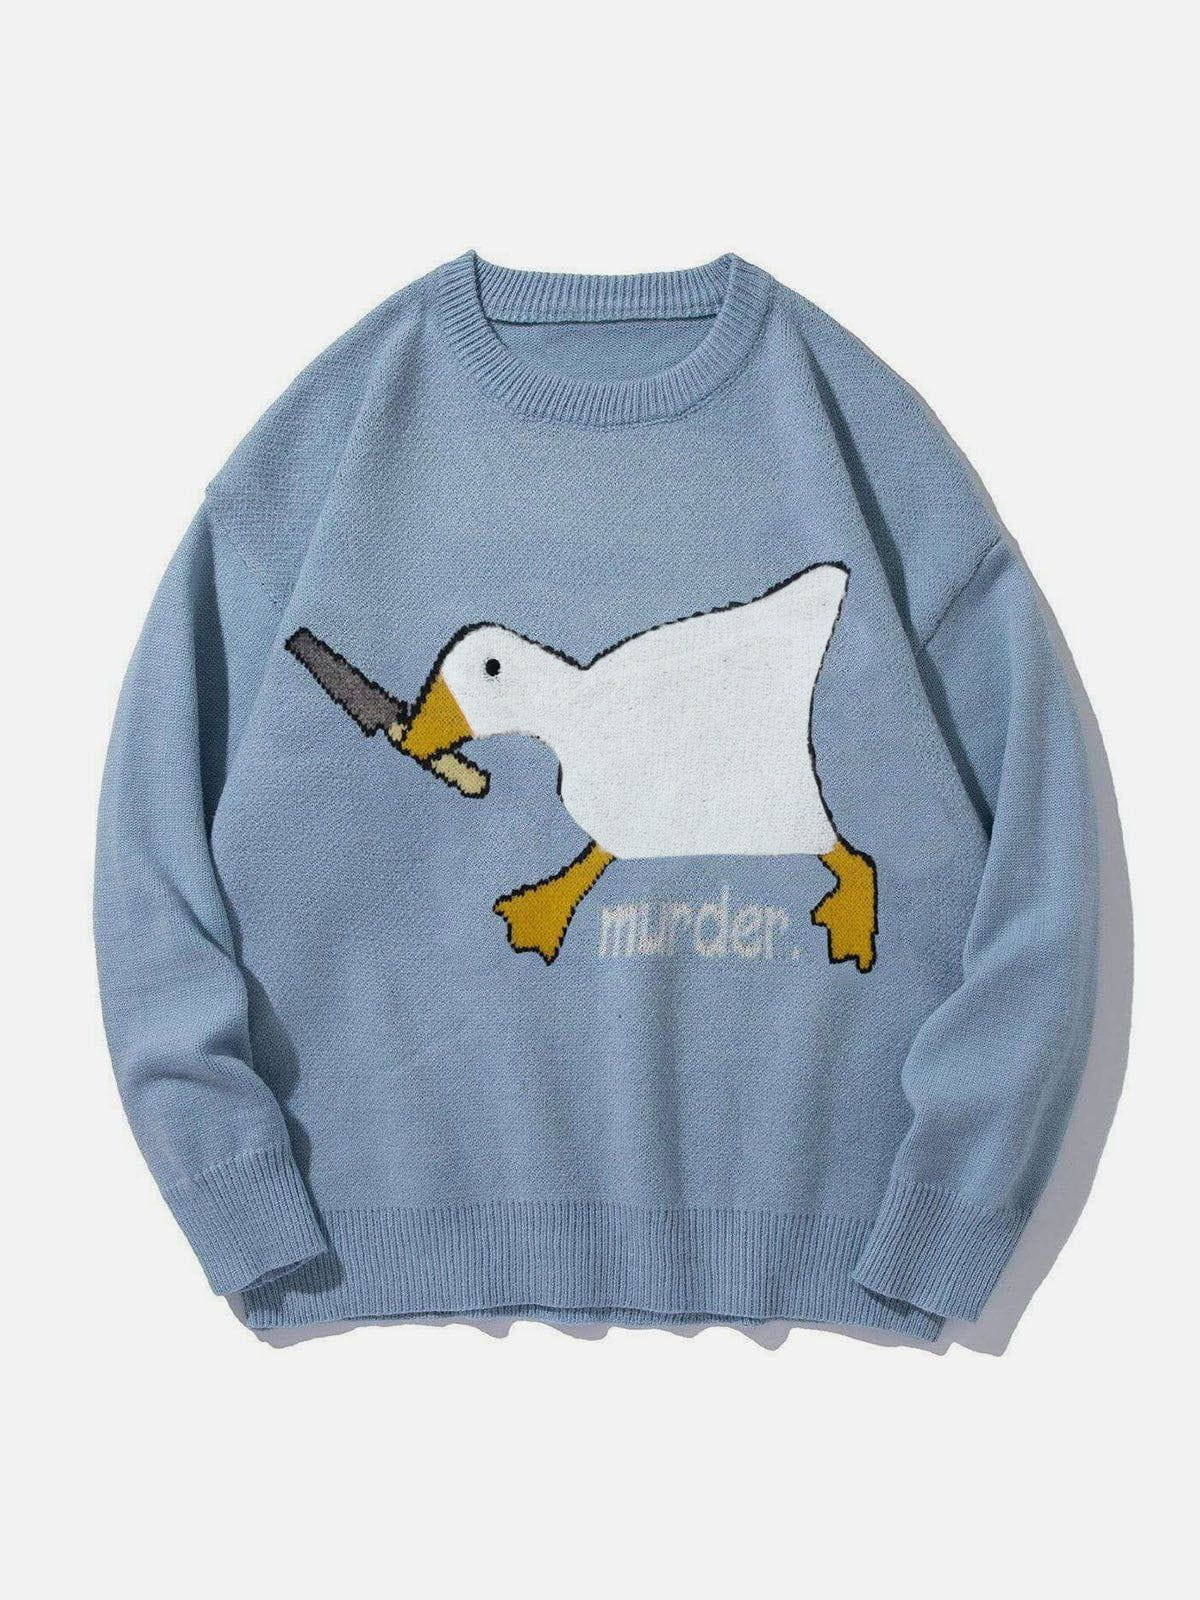 Faire Echo Murder Goose Knitted Sweater Faire Echo